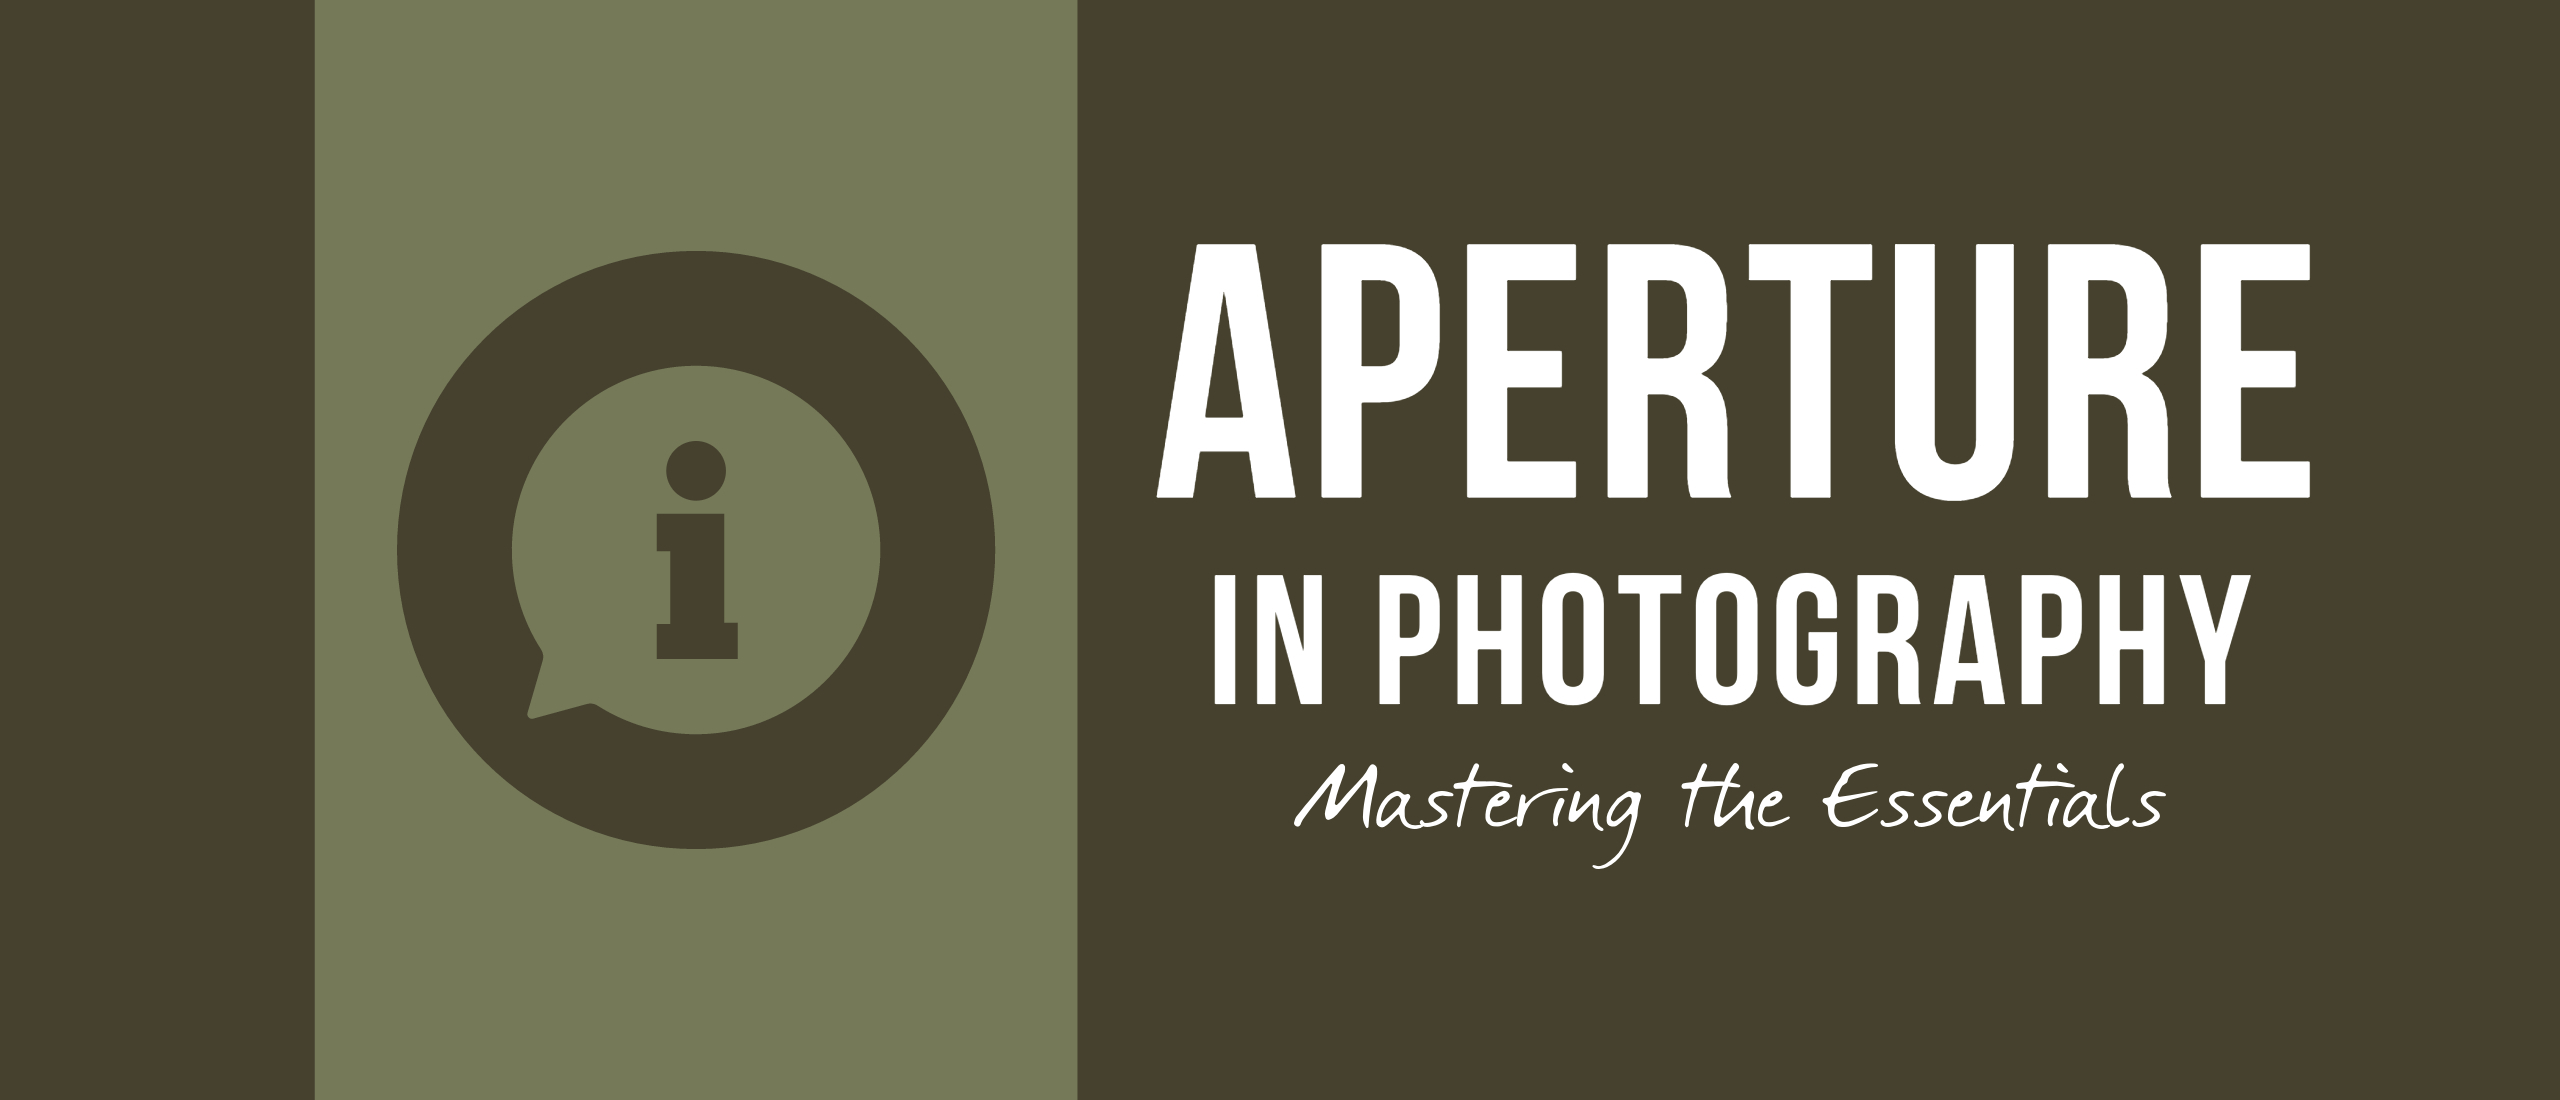 What is Aperture? Understanding Aperture in Photography